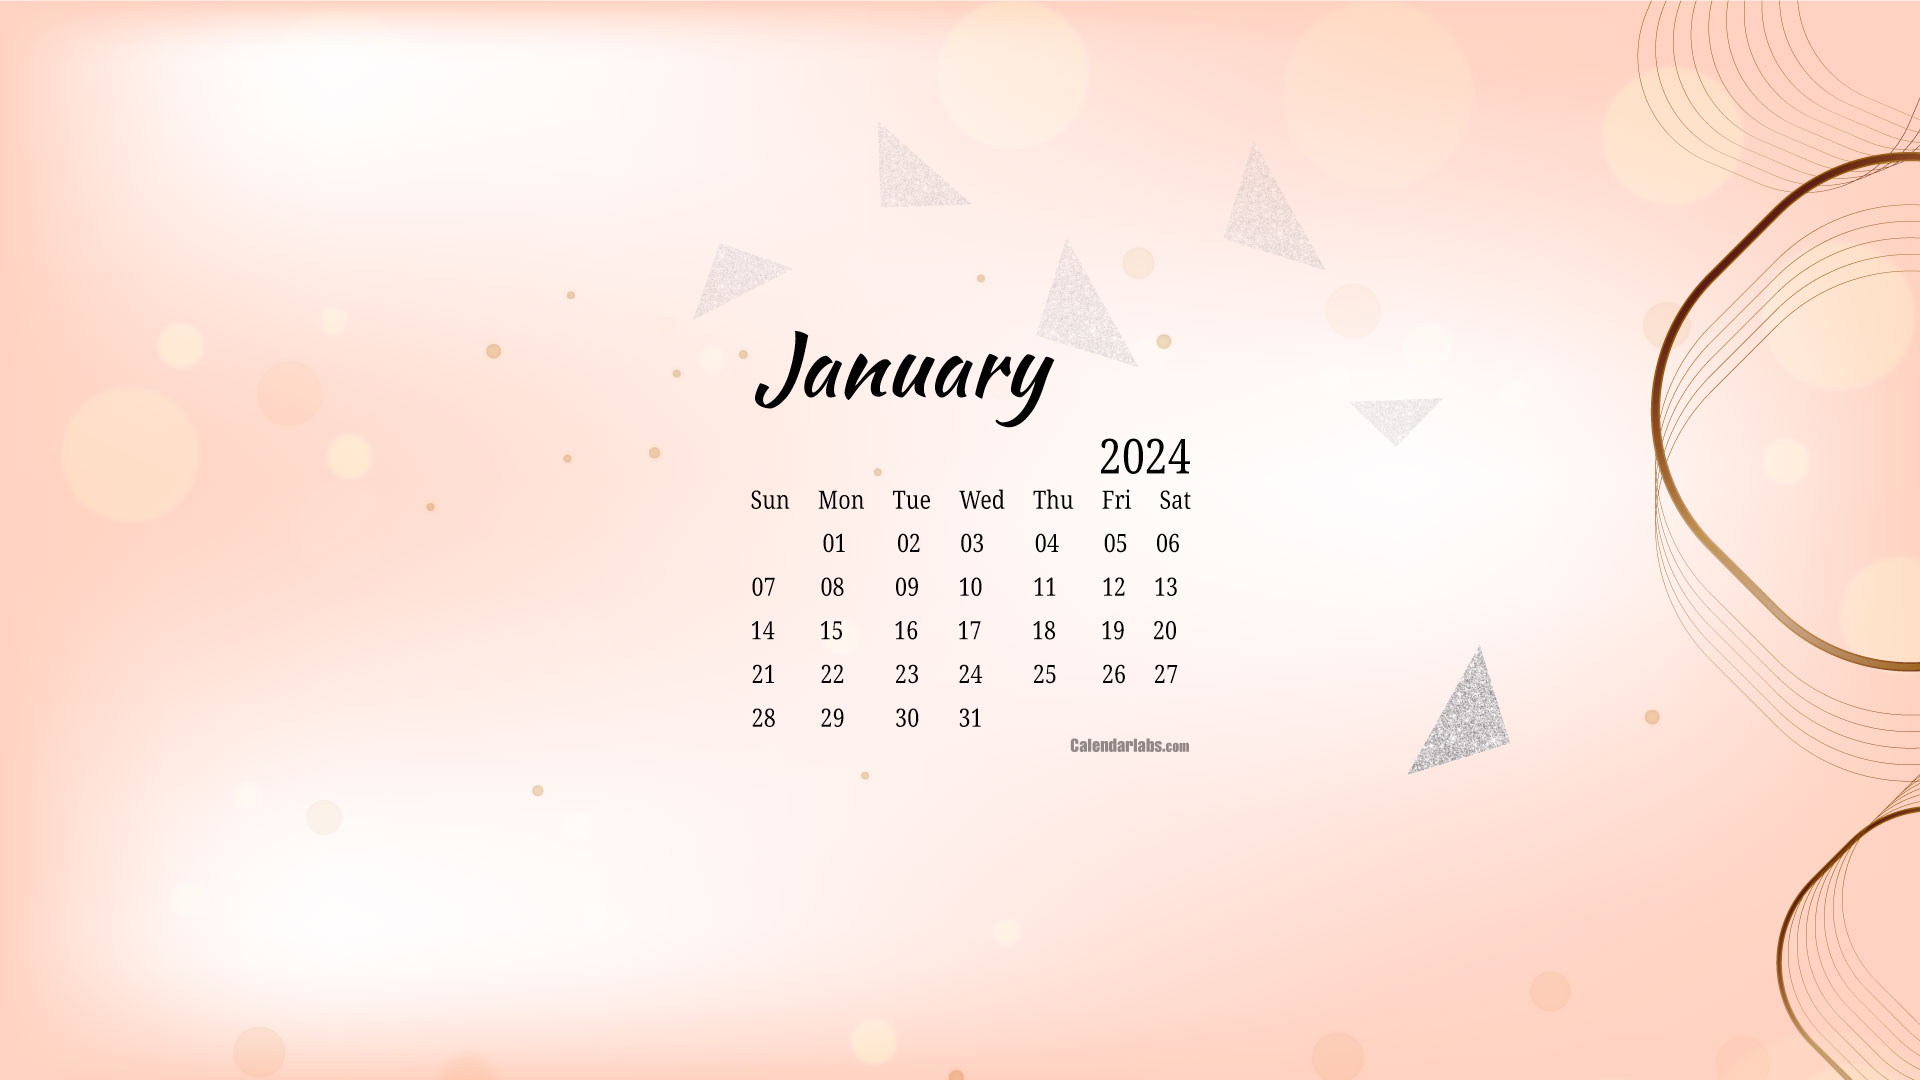 2024 January Calendar Wallpaper Downloads Free Sharl Demetris